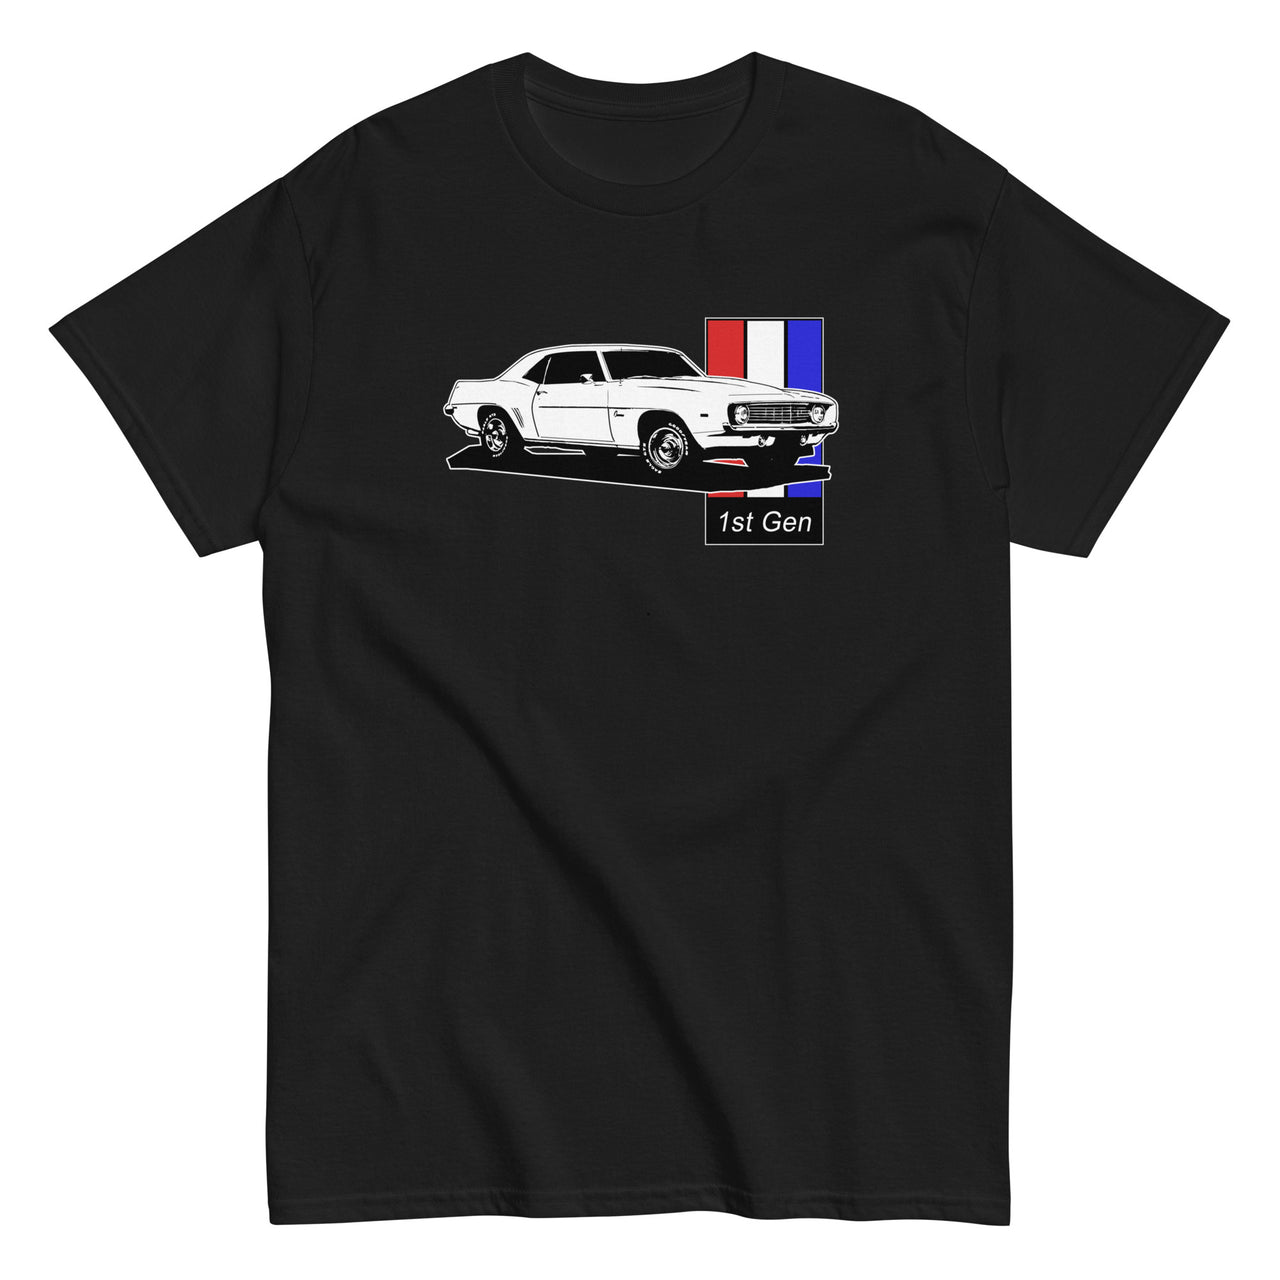 1969 Camaro T-Shirt in black